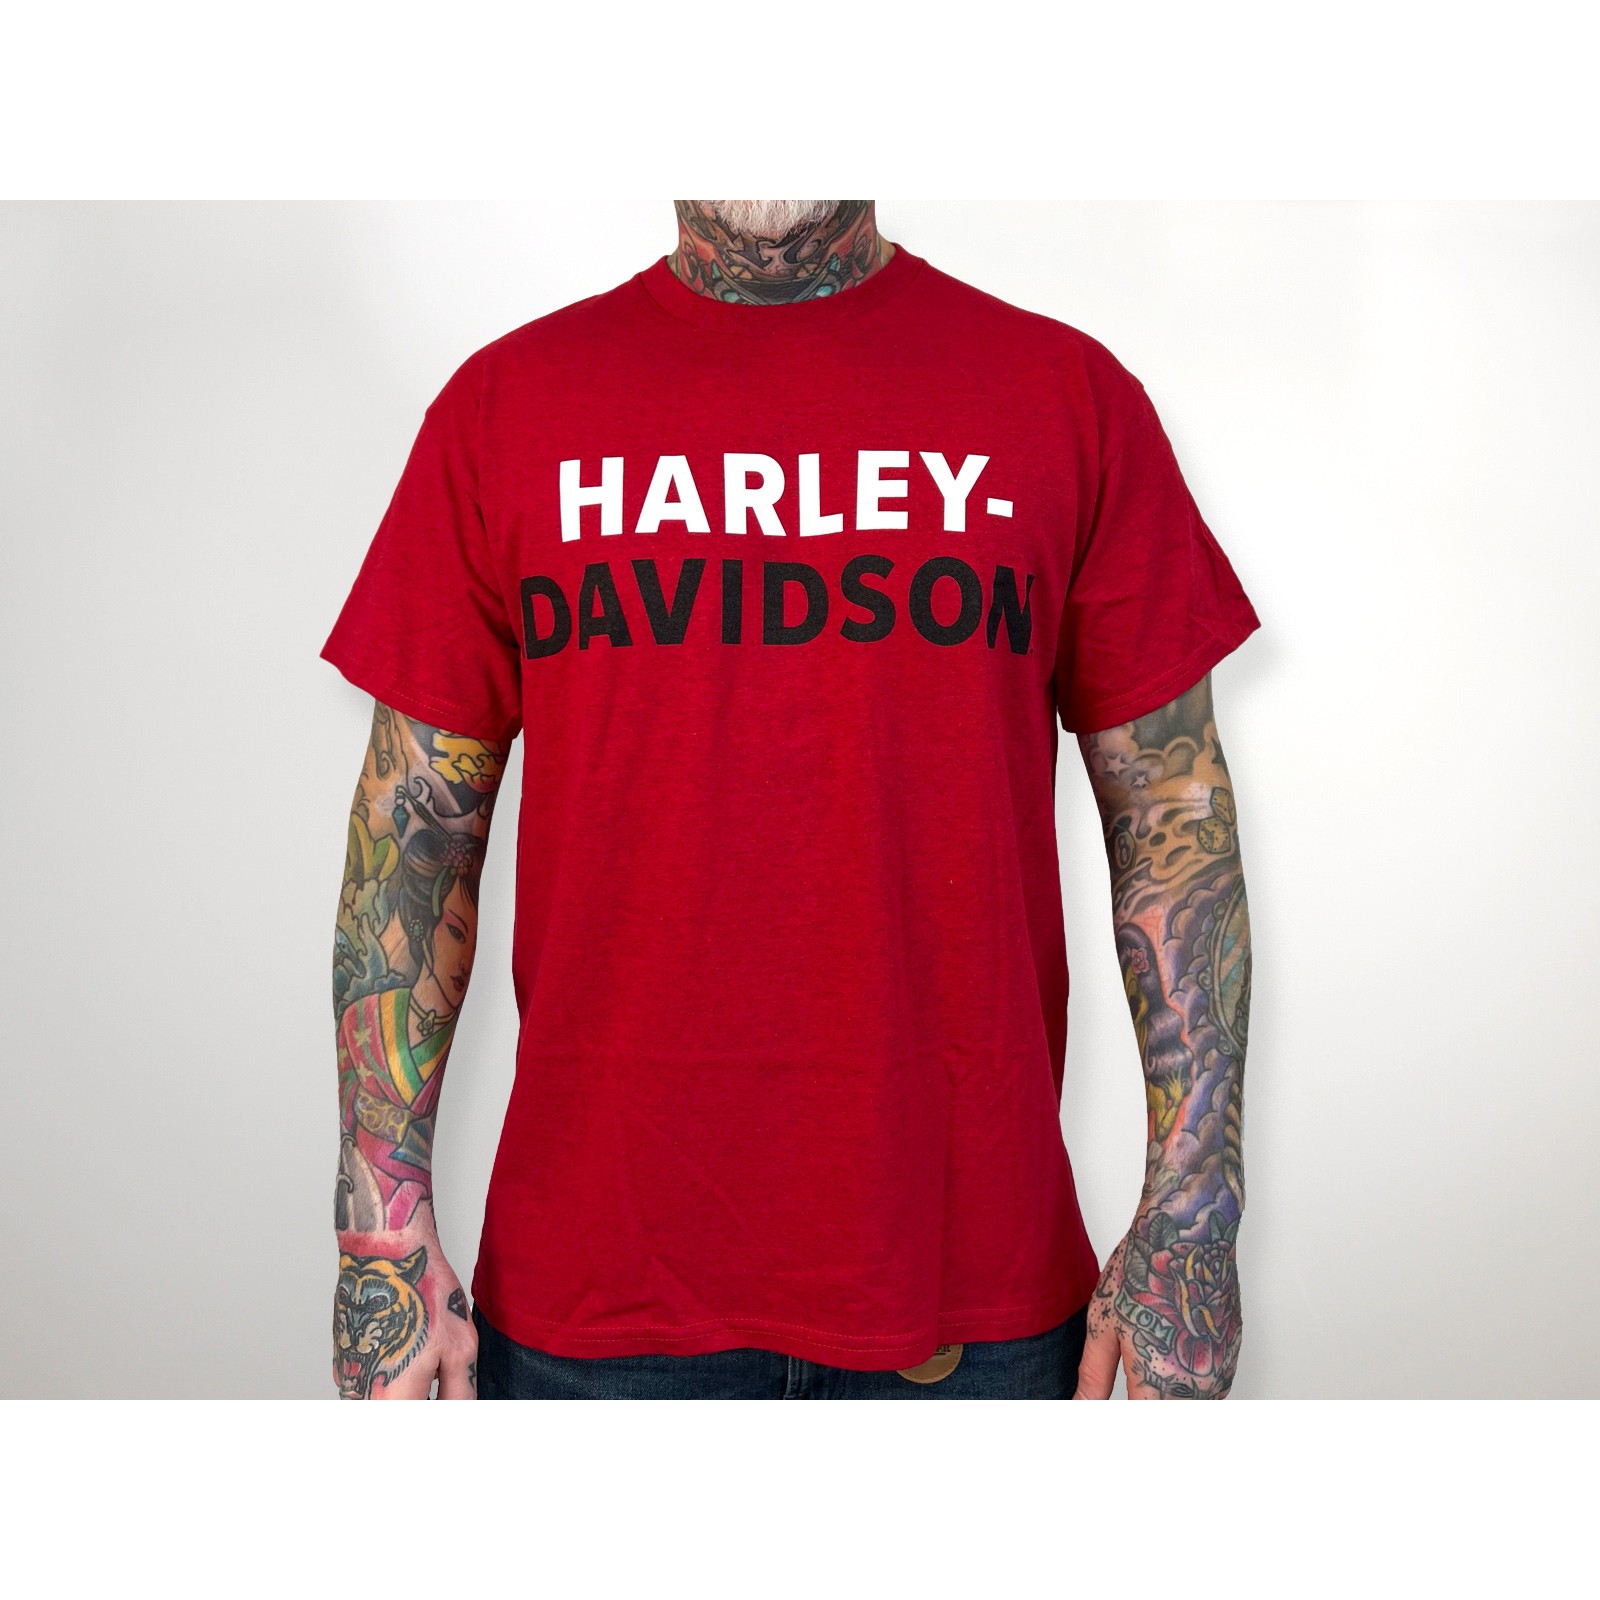 Company T-Shirts & von The Davidson! Harley Rokker